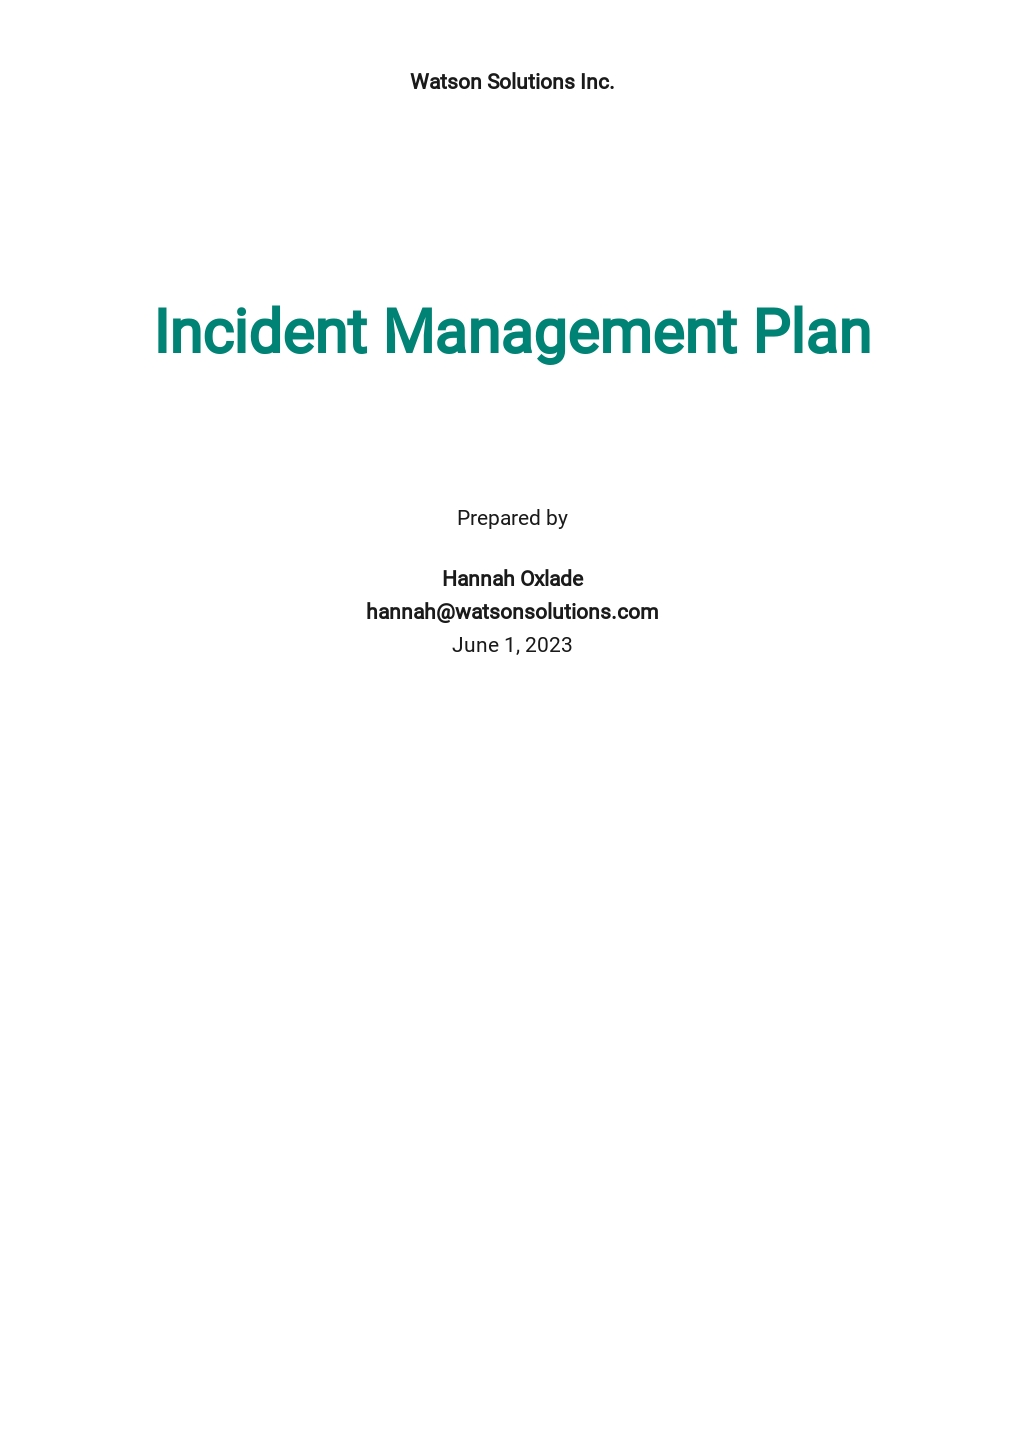 Incident Management Plan Template.jpe